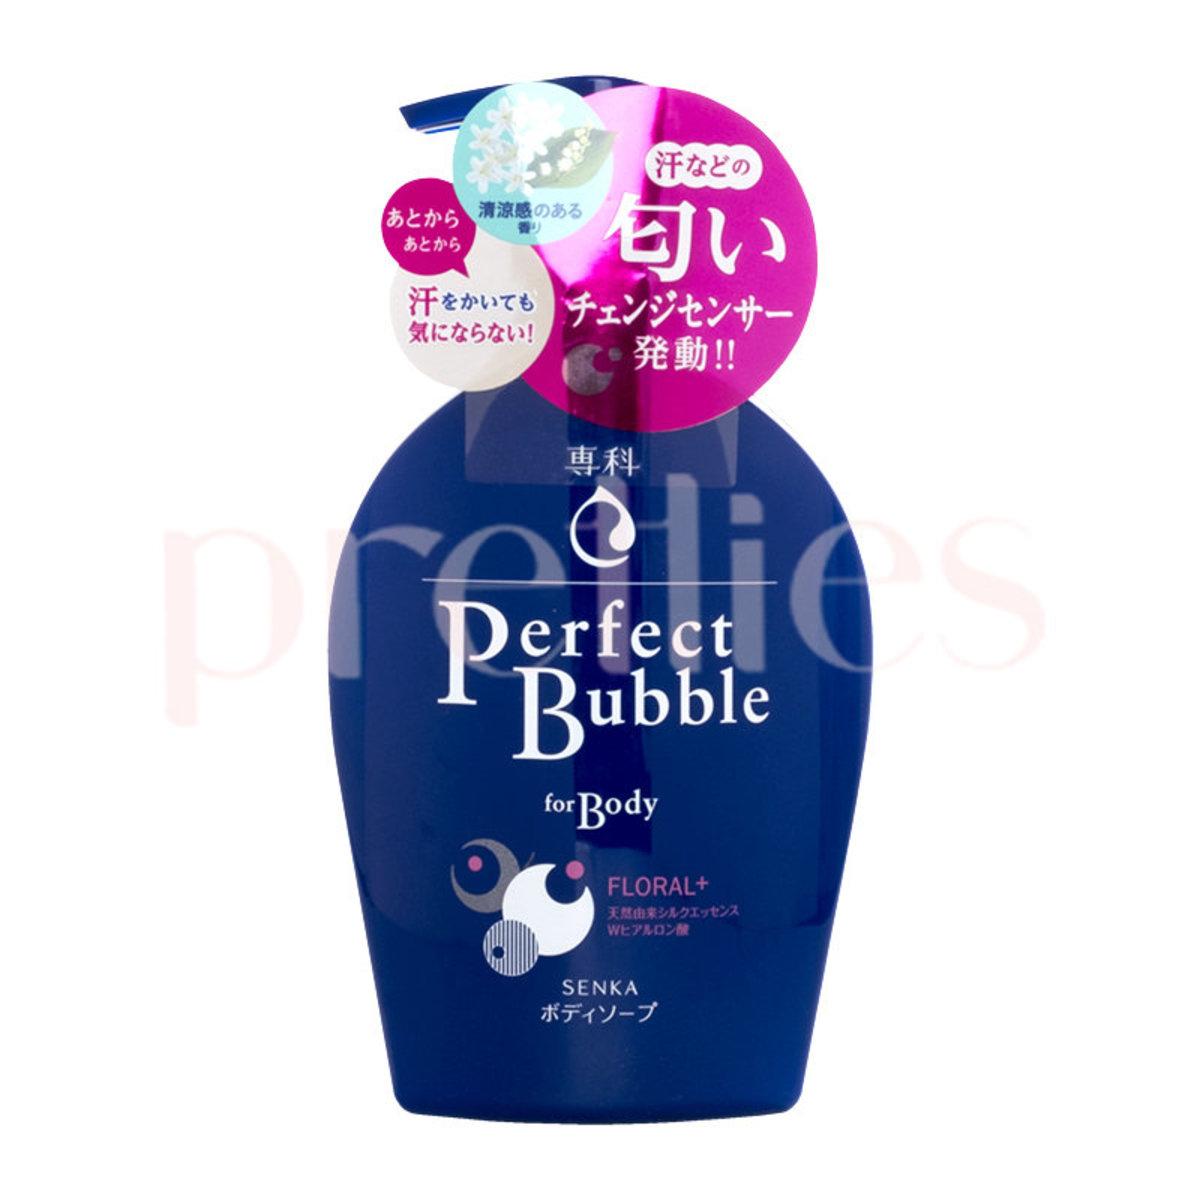 Shiseido 資生堂 Shiseido Perfect Bubble Body Bubble Wash Floral 500ml